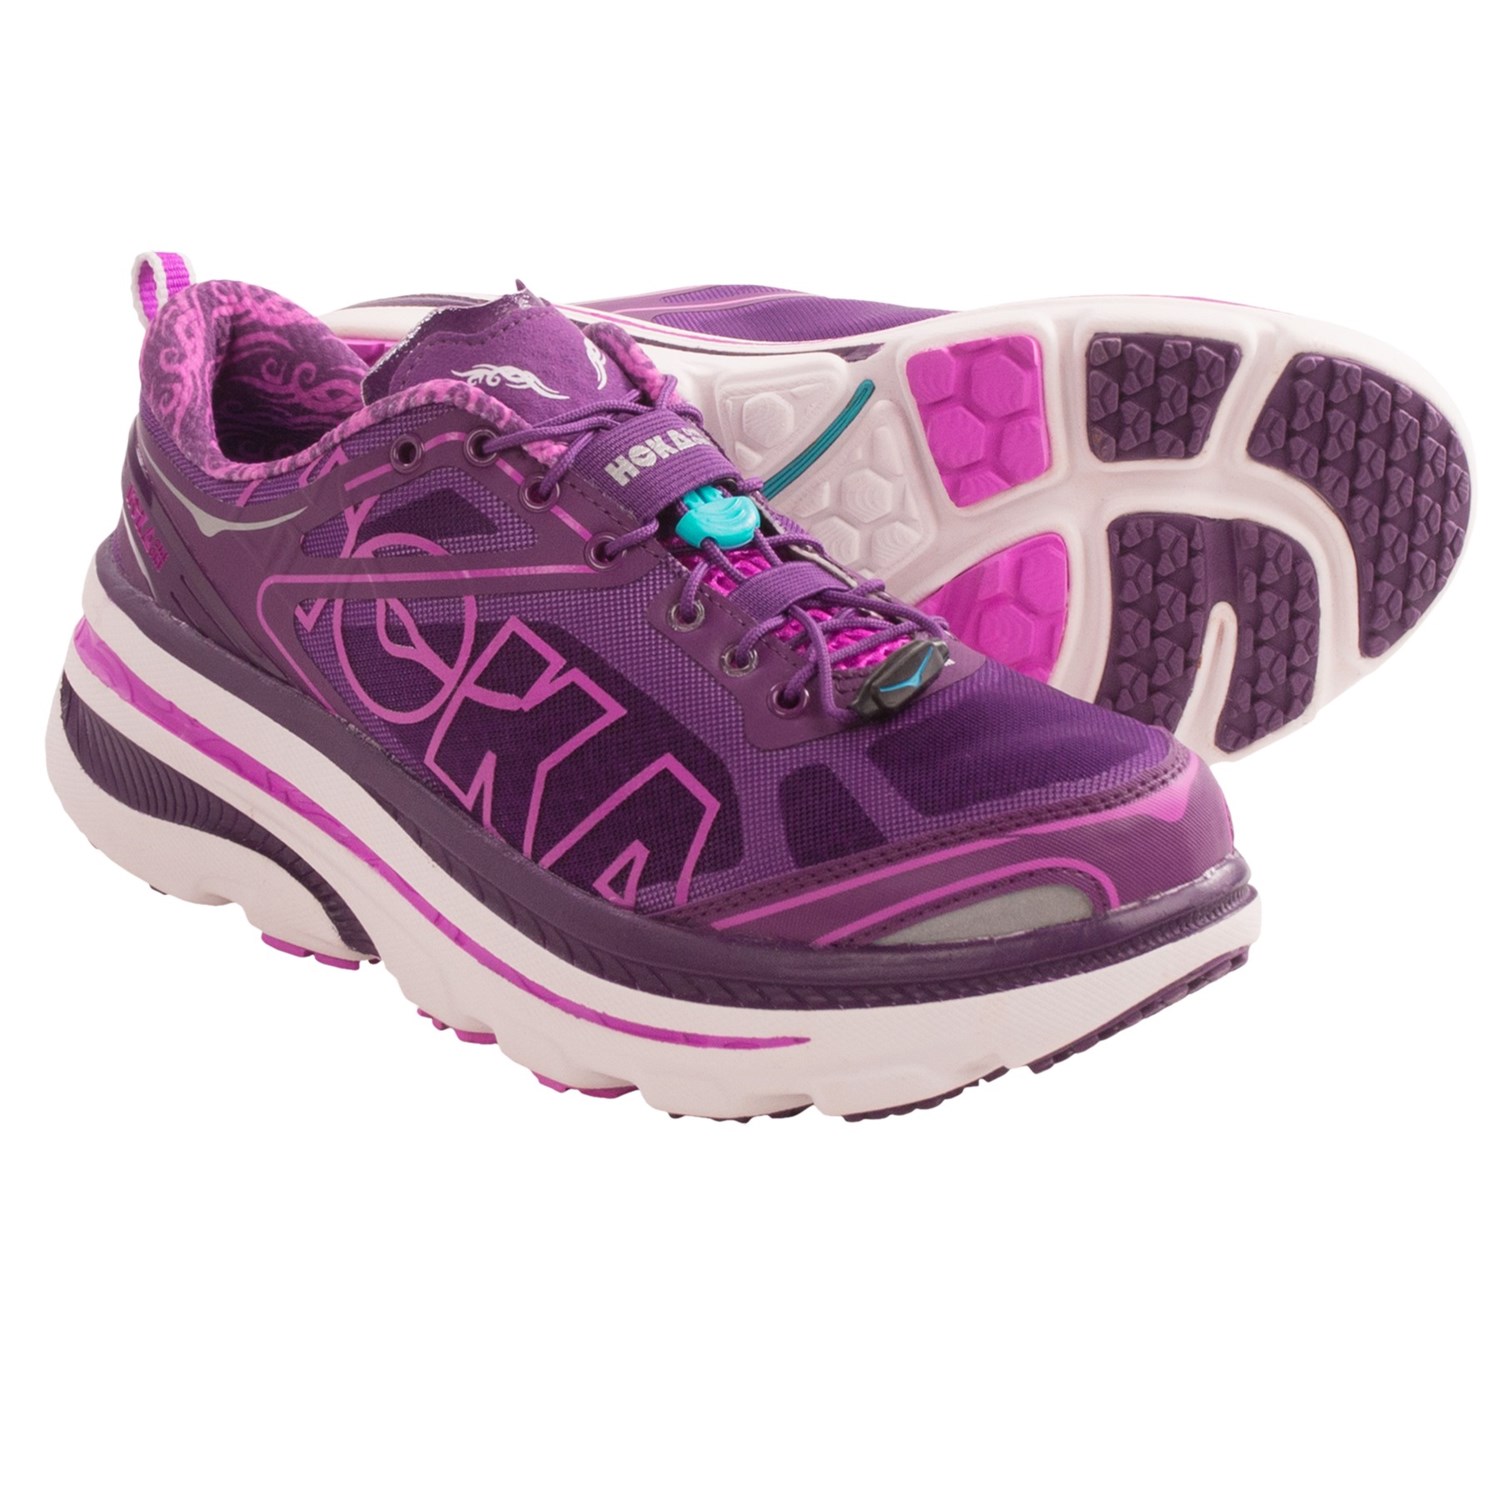 Hoka One One Bondi 3 Road Running Shoes (For Women) 8181V - Save 50%